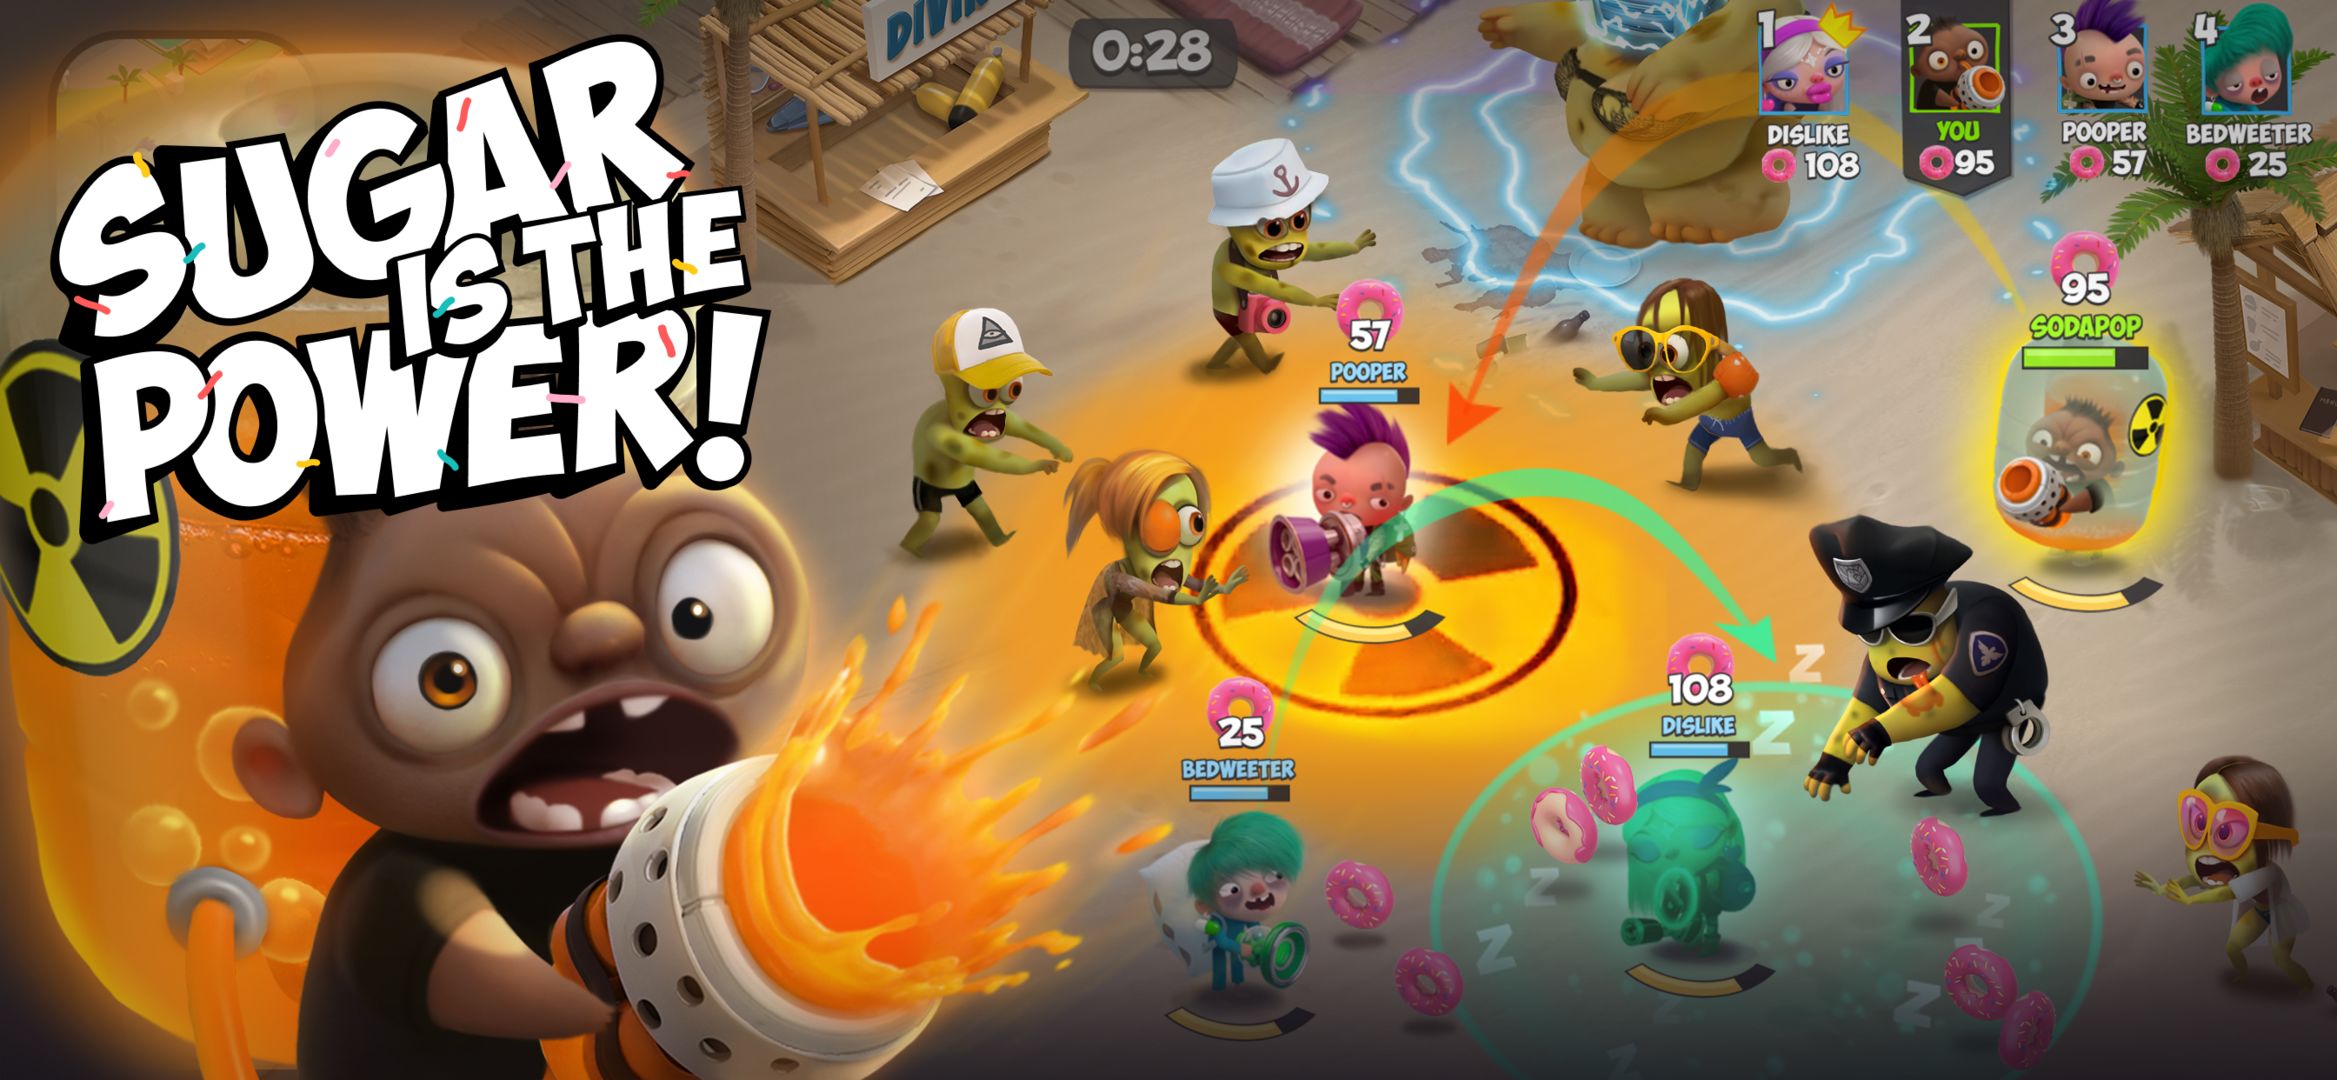 Screenshot of Kids vs Zombies: Donuts Brawl